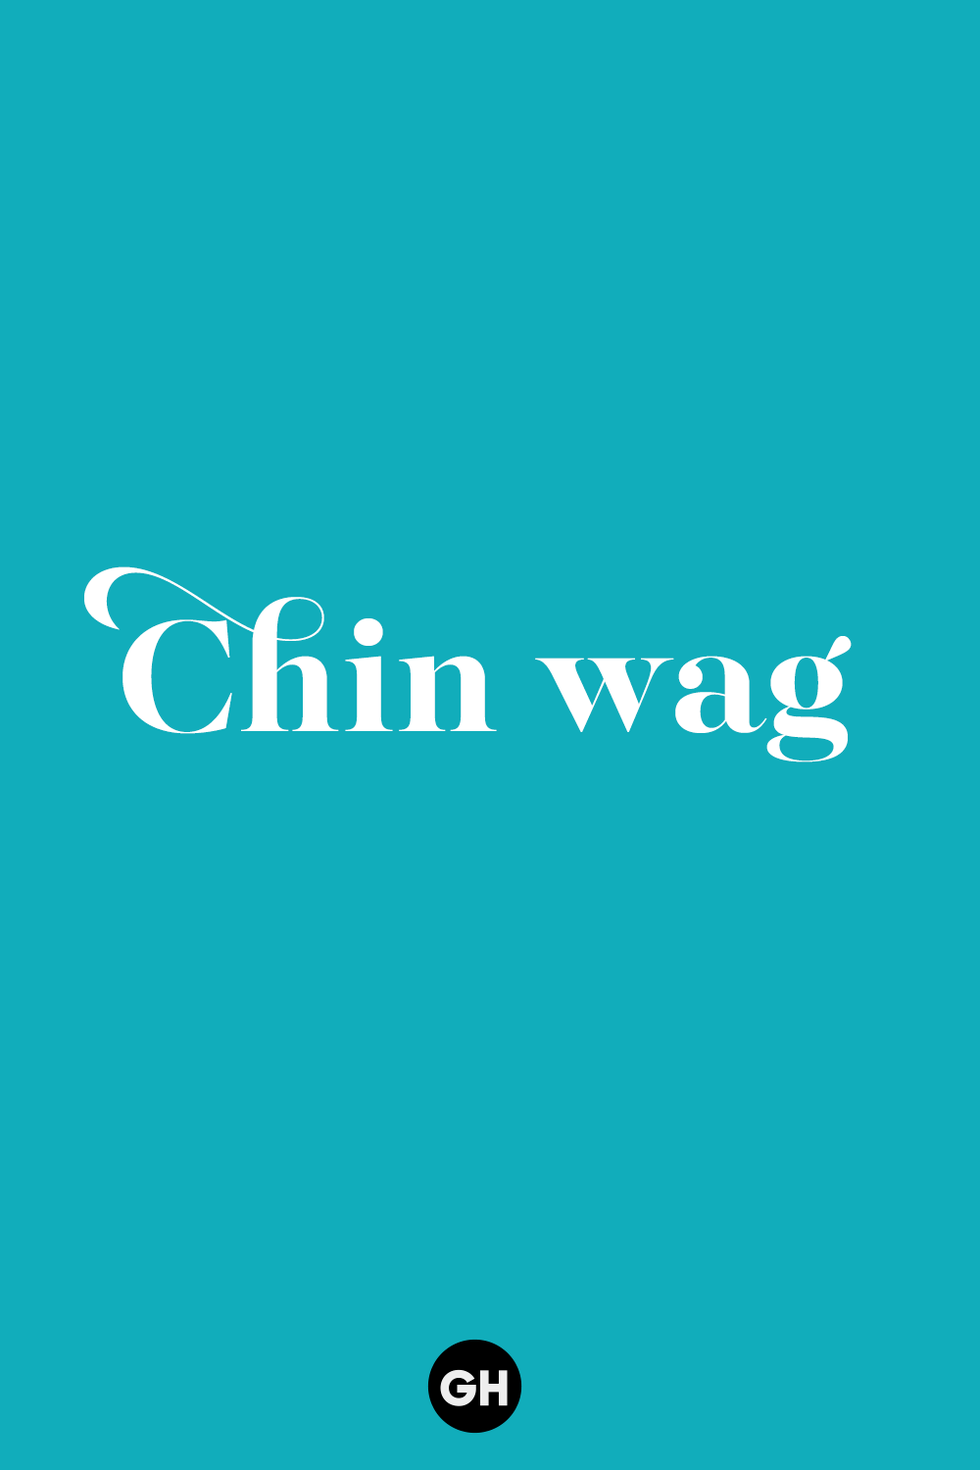 Slang Similarities in English and Chinese